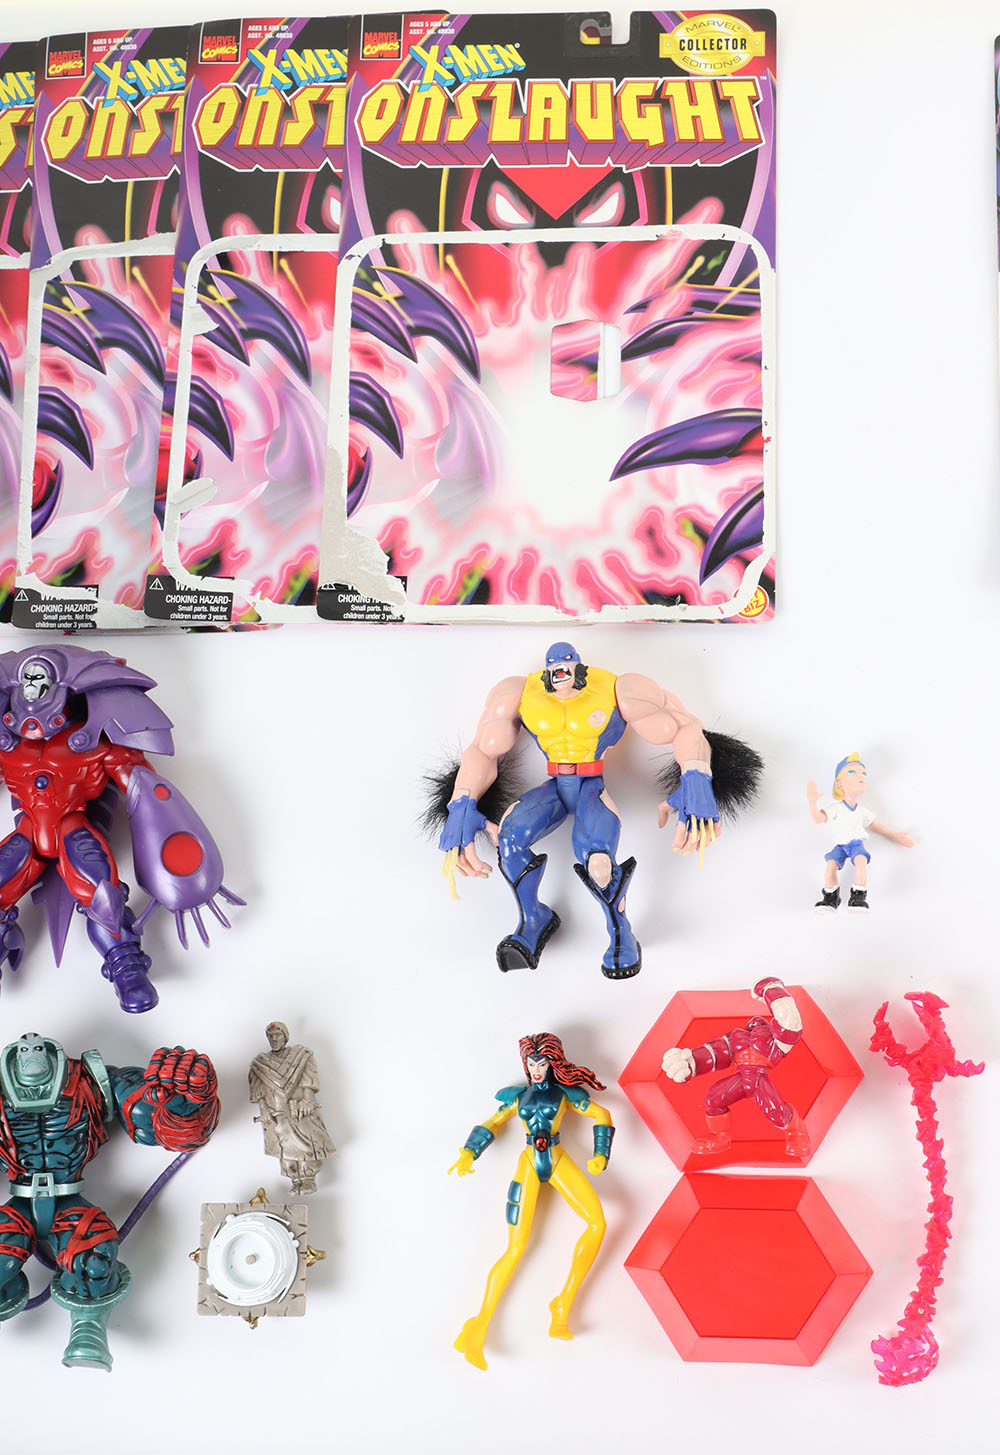 X-men Toybiz Mixed series figures - Image 4 of 5